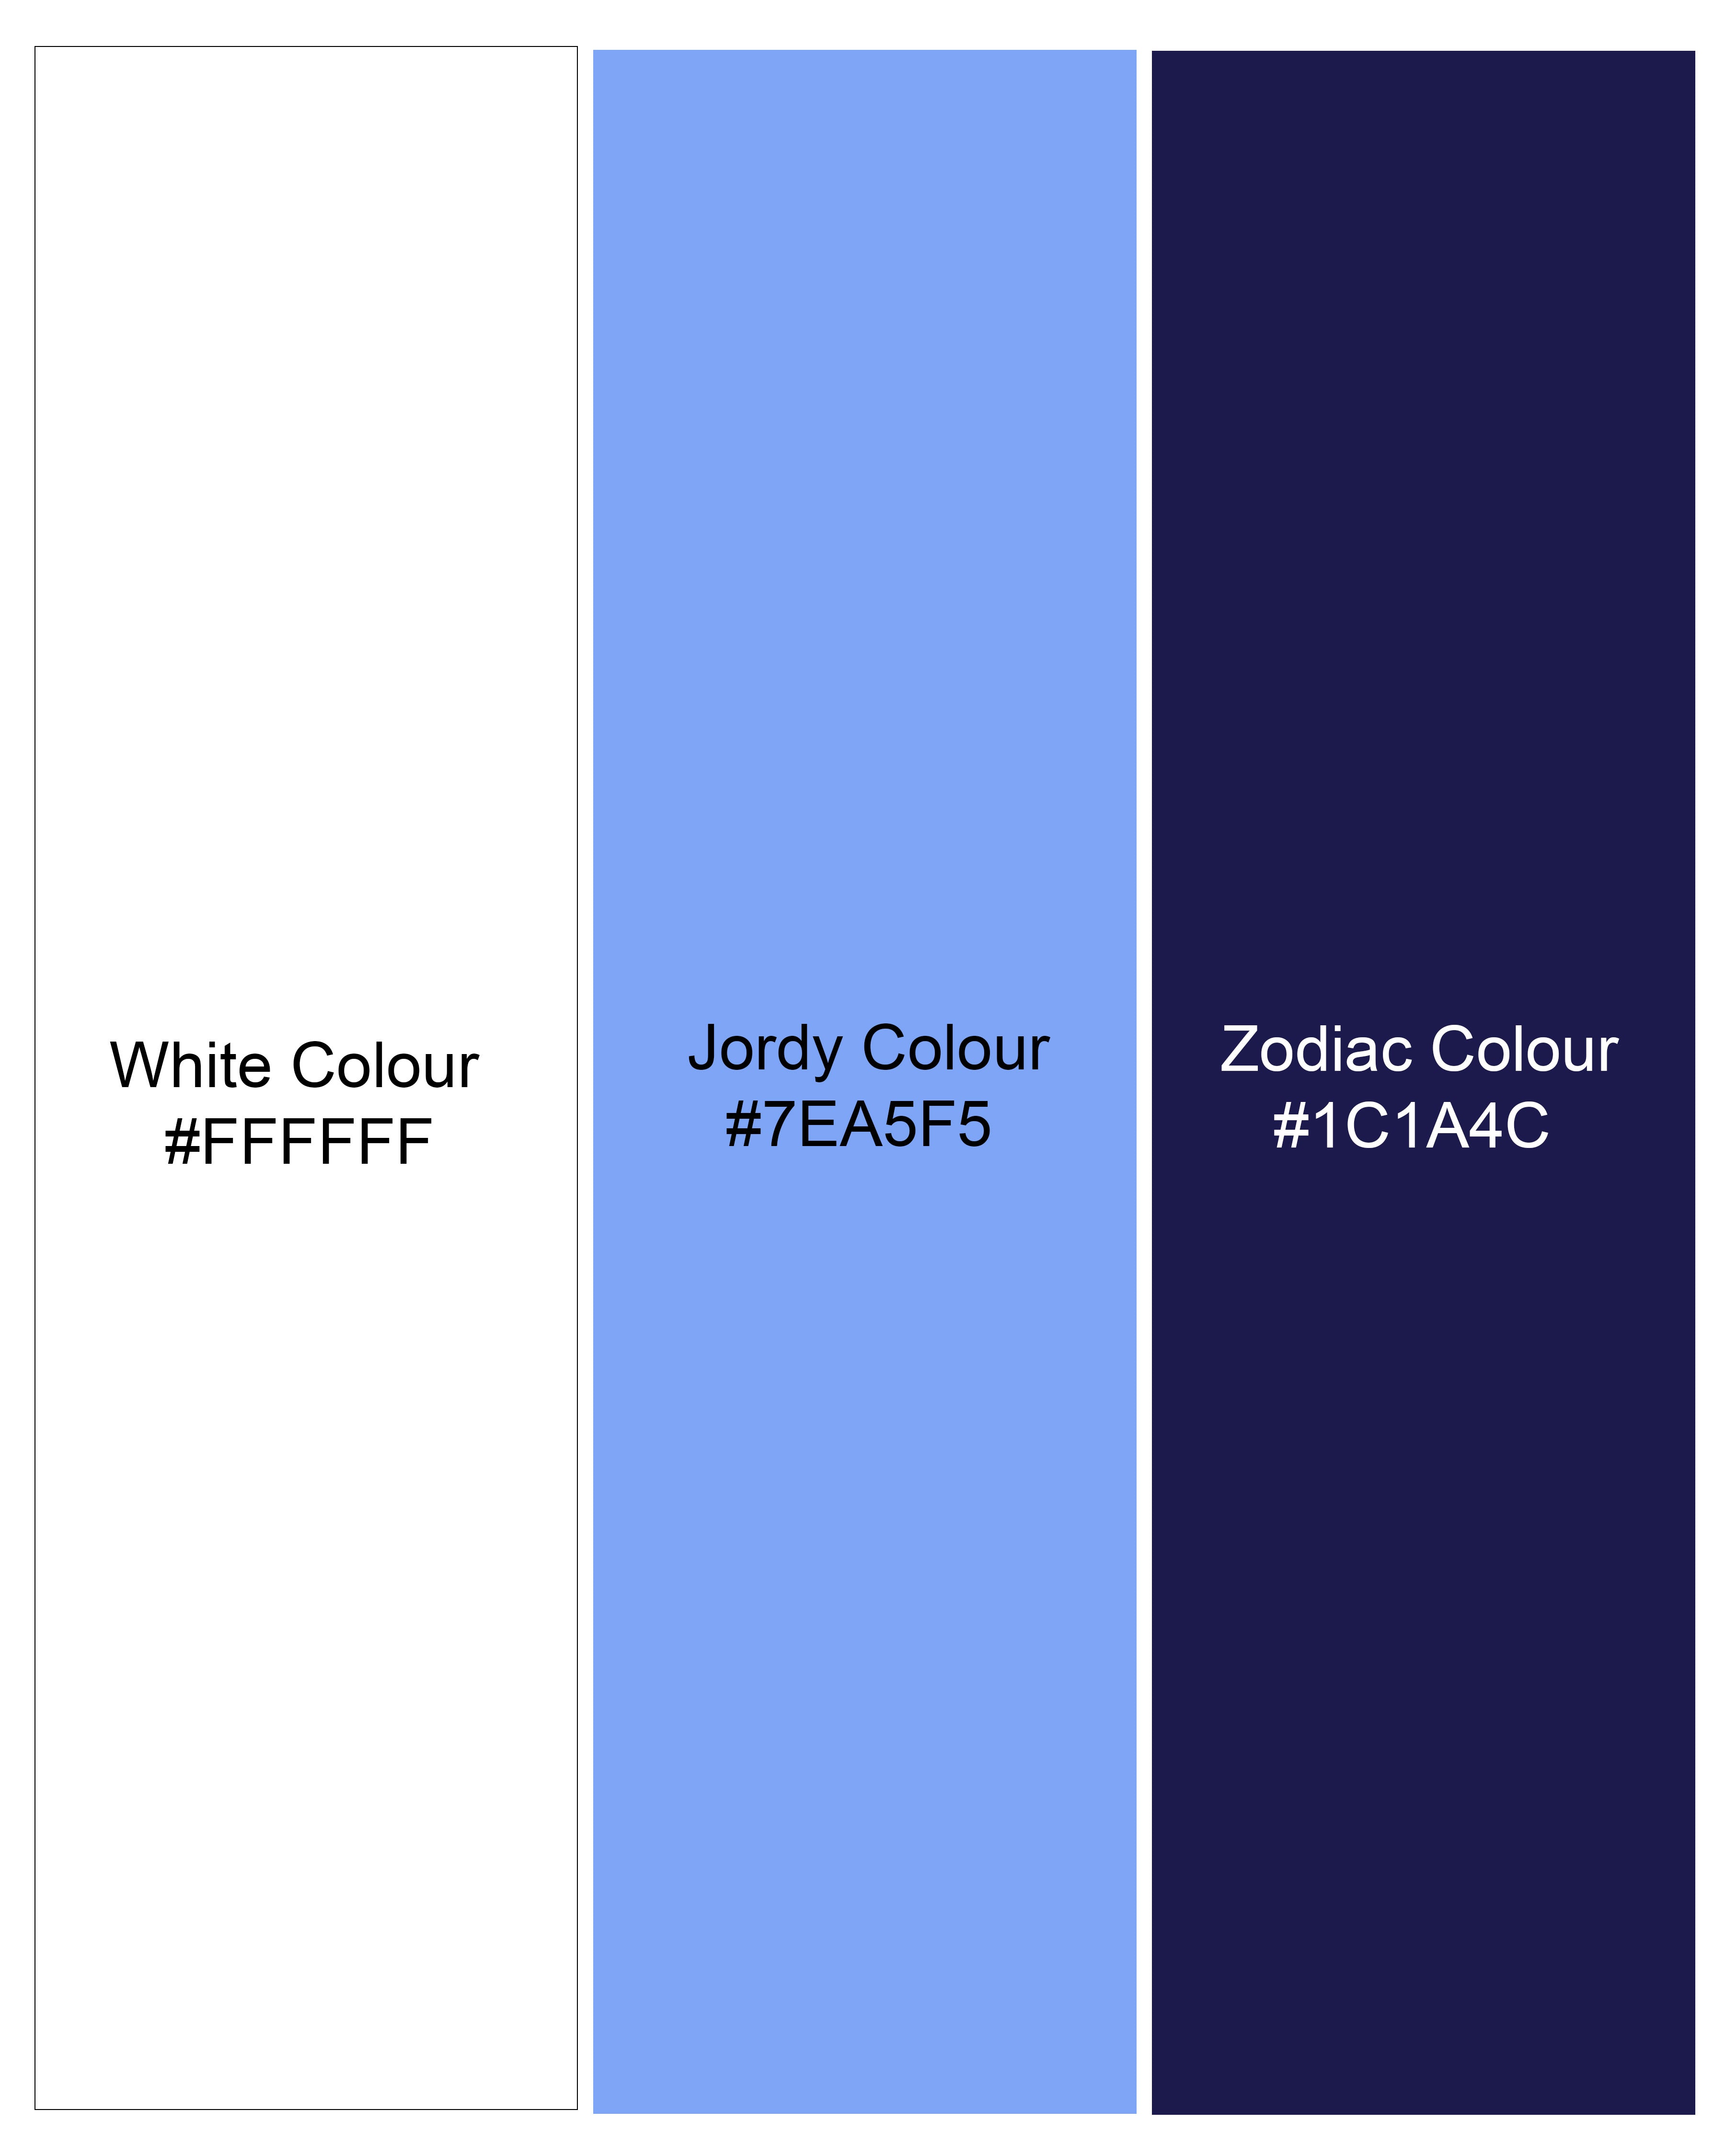 Bright White with Jordy Blue and Zodiac Navy Blue Striped Dobby Textured Premium Giza Cotton Shirt  8502-BLE-38,8502-BLE-H-38,8502-BLE-39,8502-BLE-H-39,8502-BLE-40,8502-BLE-H-40,8502-BLE-42,8502-BLE-H-42,8502-BLE-44,8502-BLE-H-44,8502-BLE-46,8502-BLE-H-46,8502-BLE-48,8502-BLE-H-48,8502-BLE-50,8502-BLE-H-50,8502-BLE-52,8502-BLE-H-52